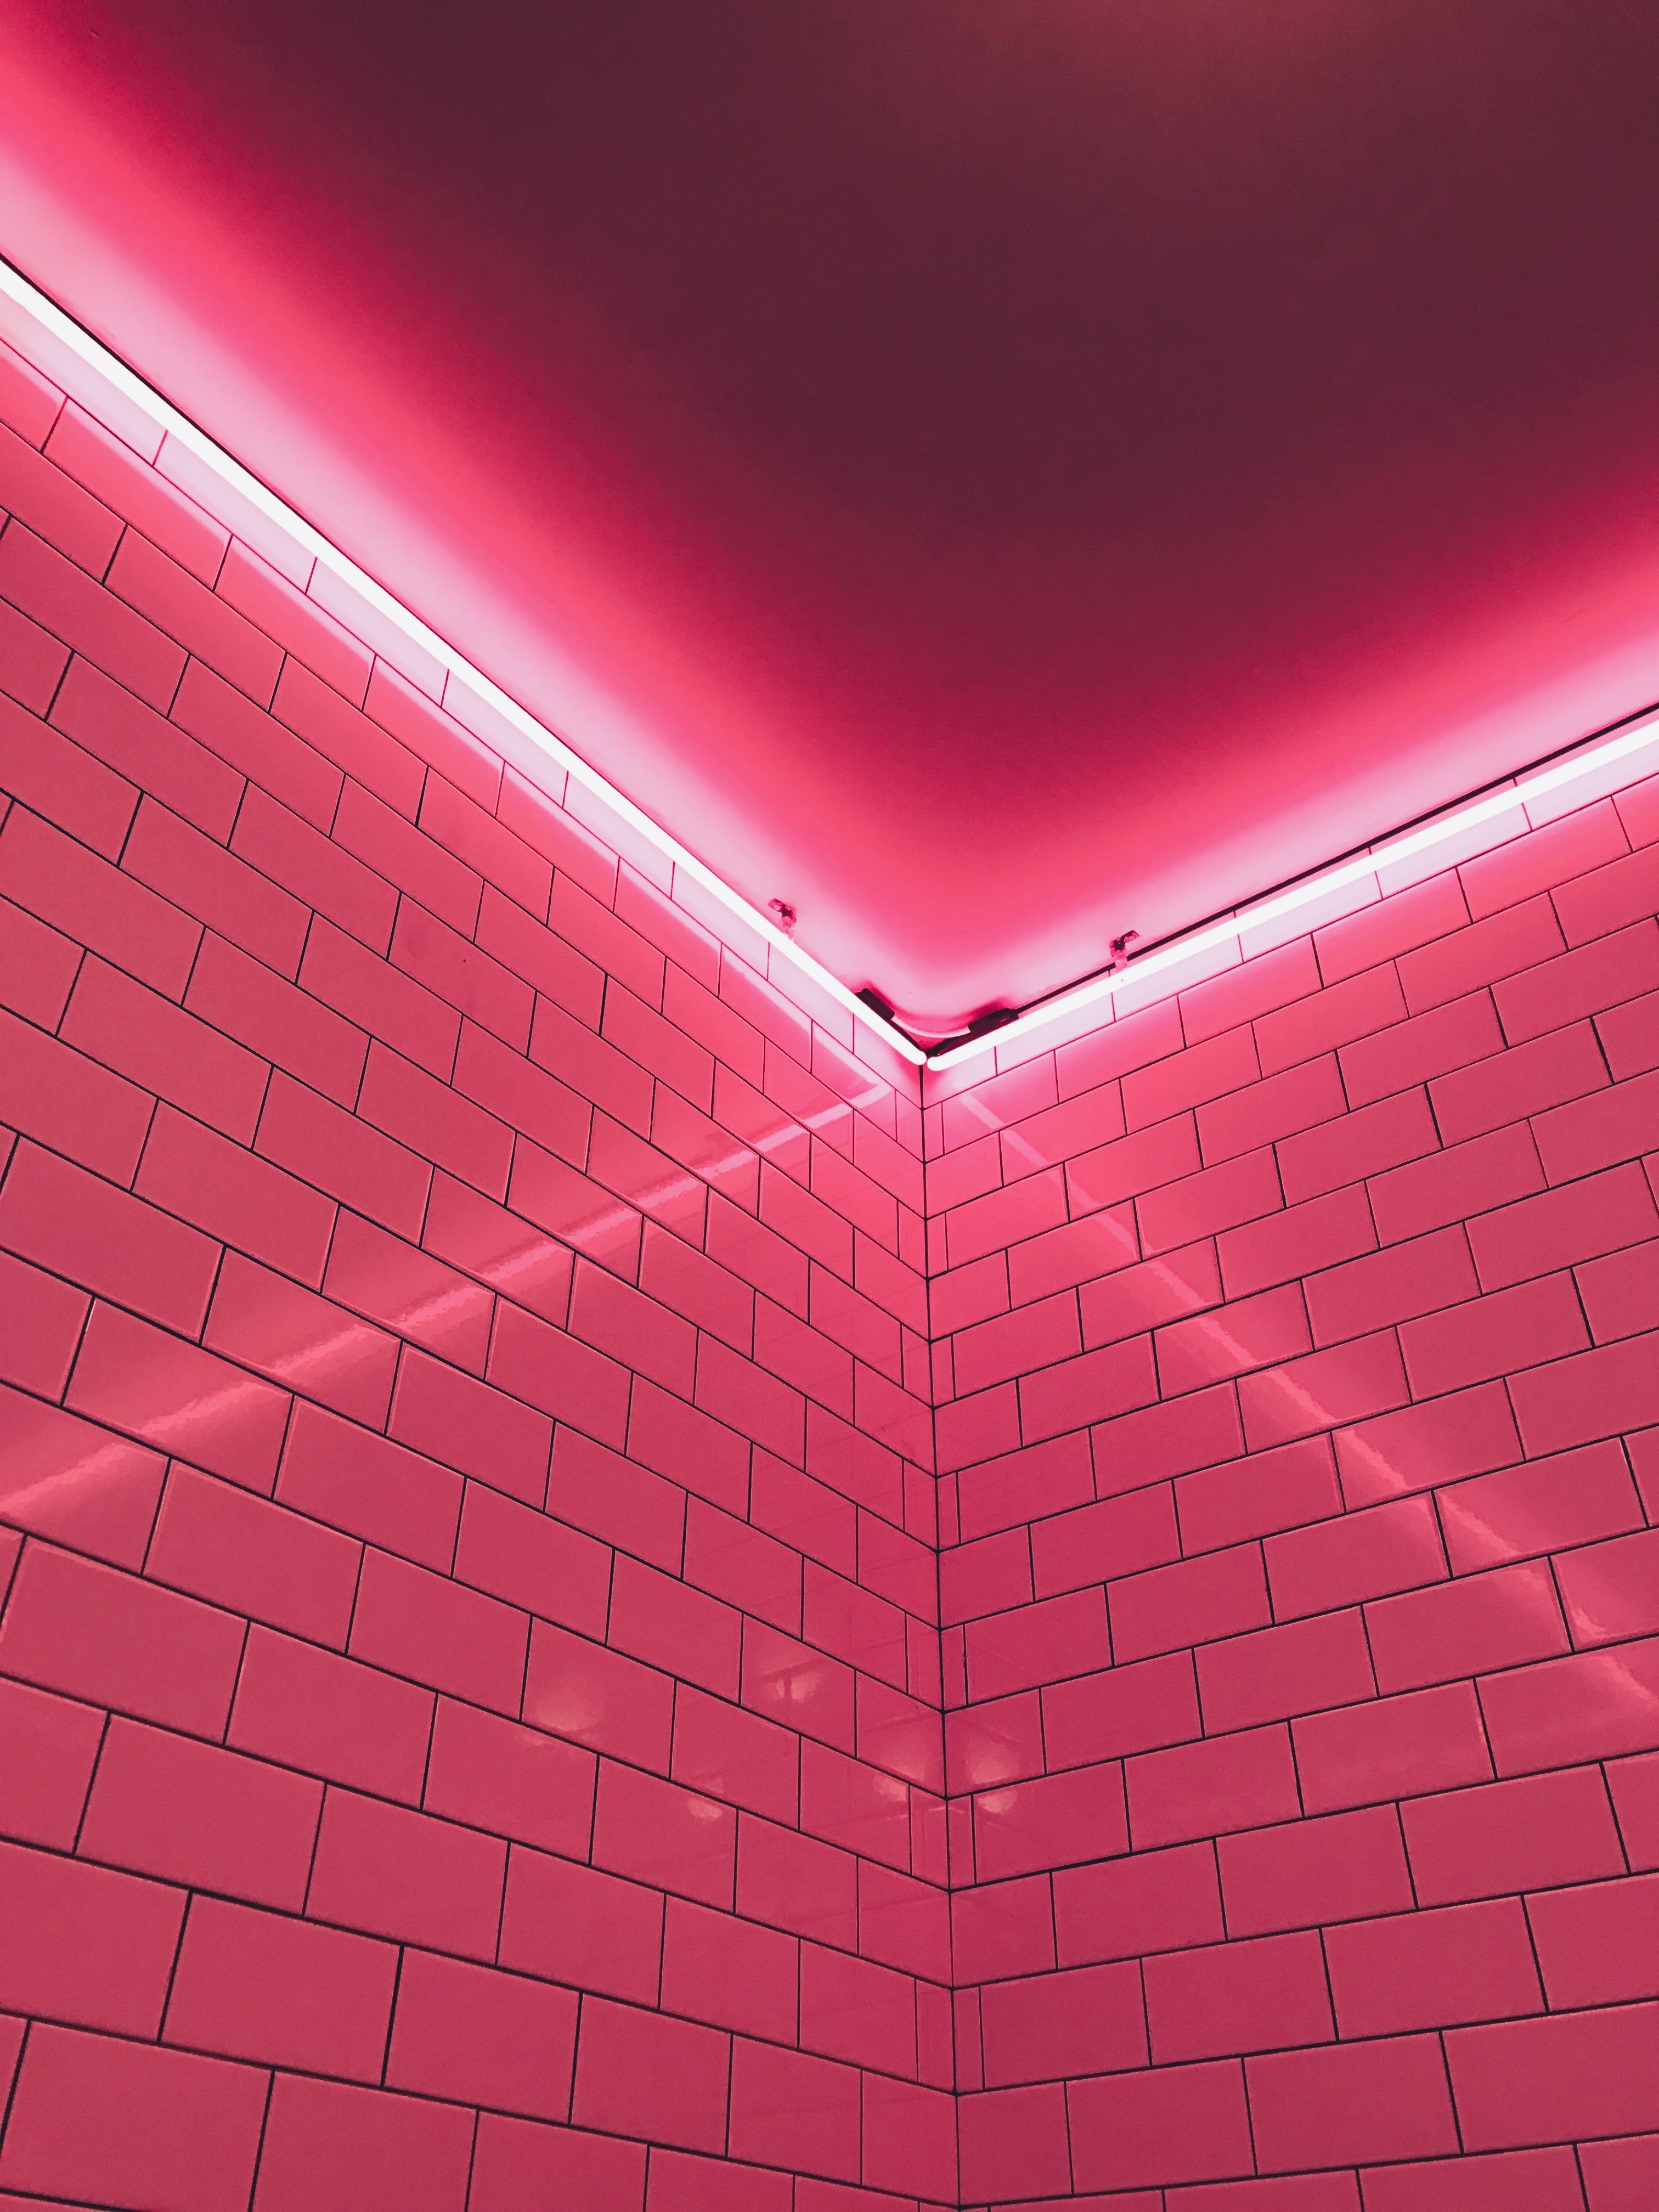 Pink Neon Lights Wallpapers